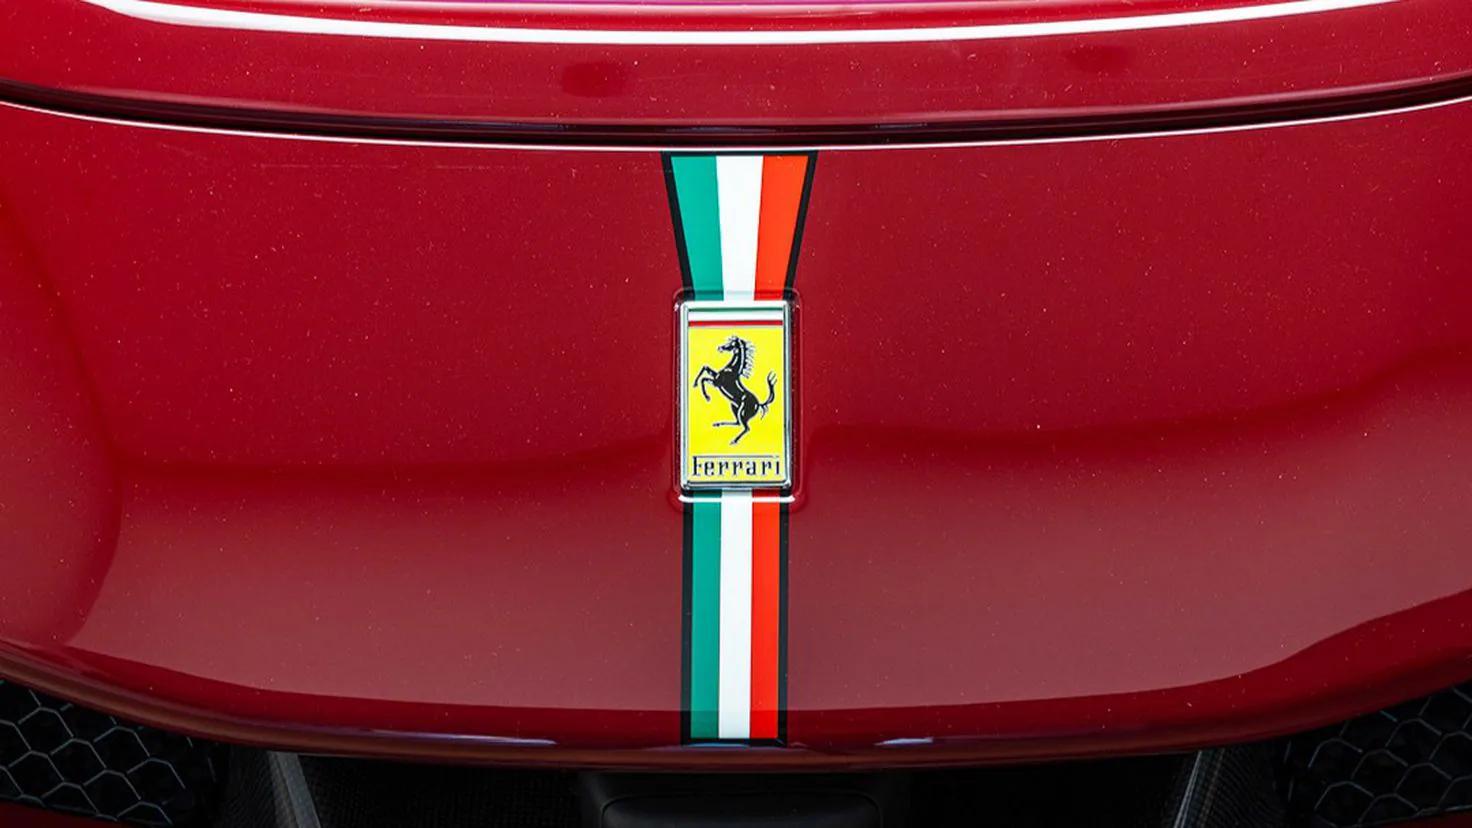 cuantos autos vende ferrari al año - Cuánto produce Ferrari